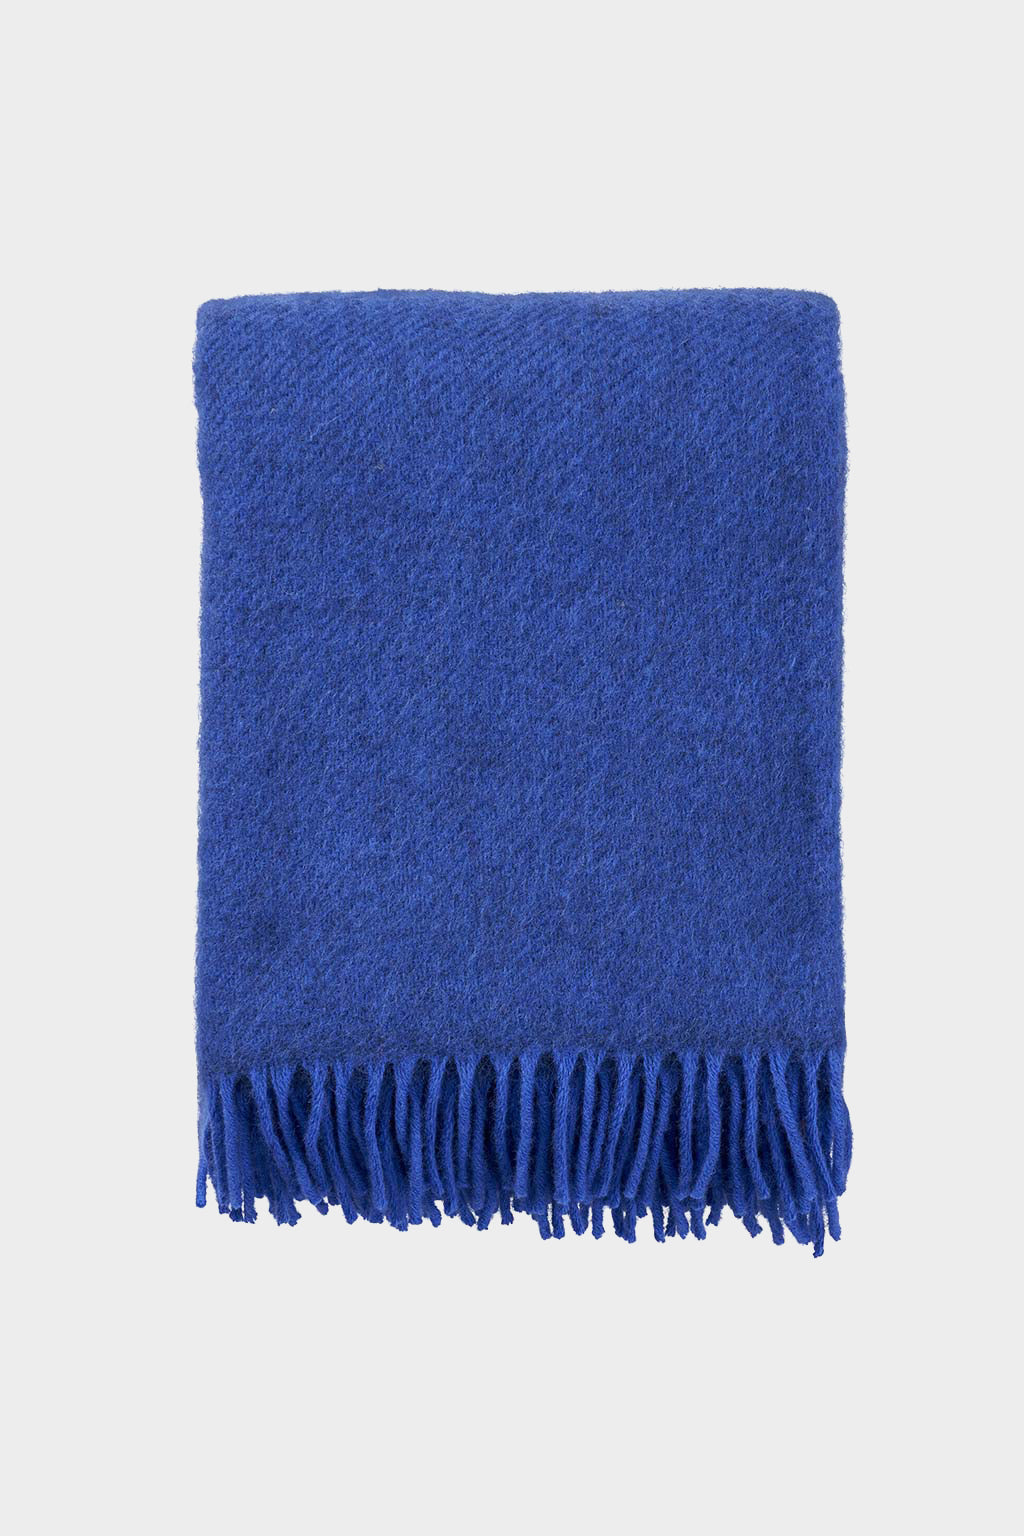 Gotland wool blanket blue-Klippan Yllefabrik-[interior]-[design]-KIOSK48TH